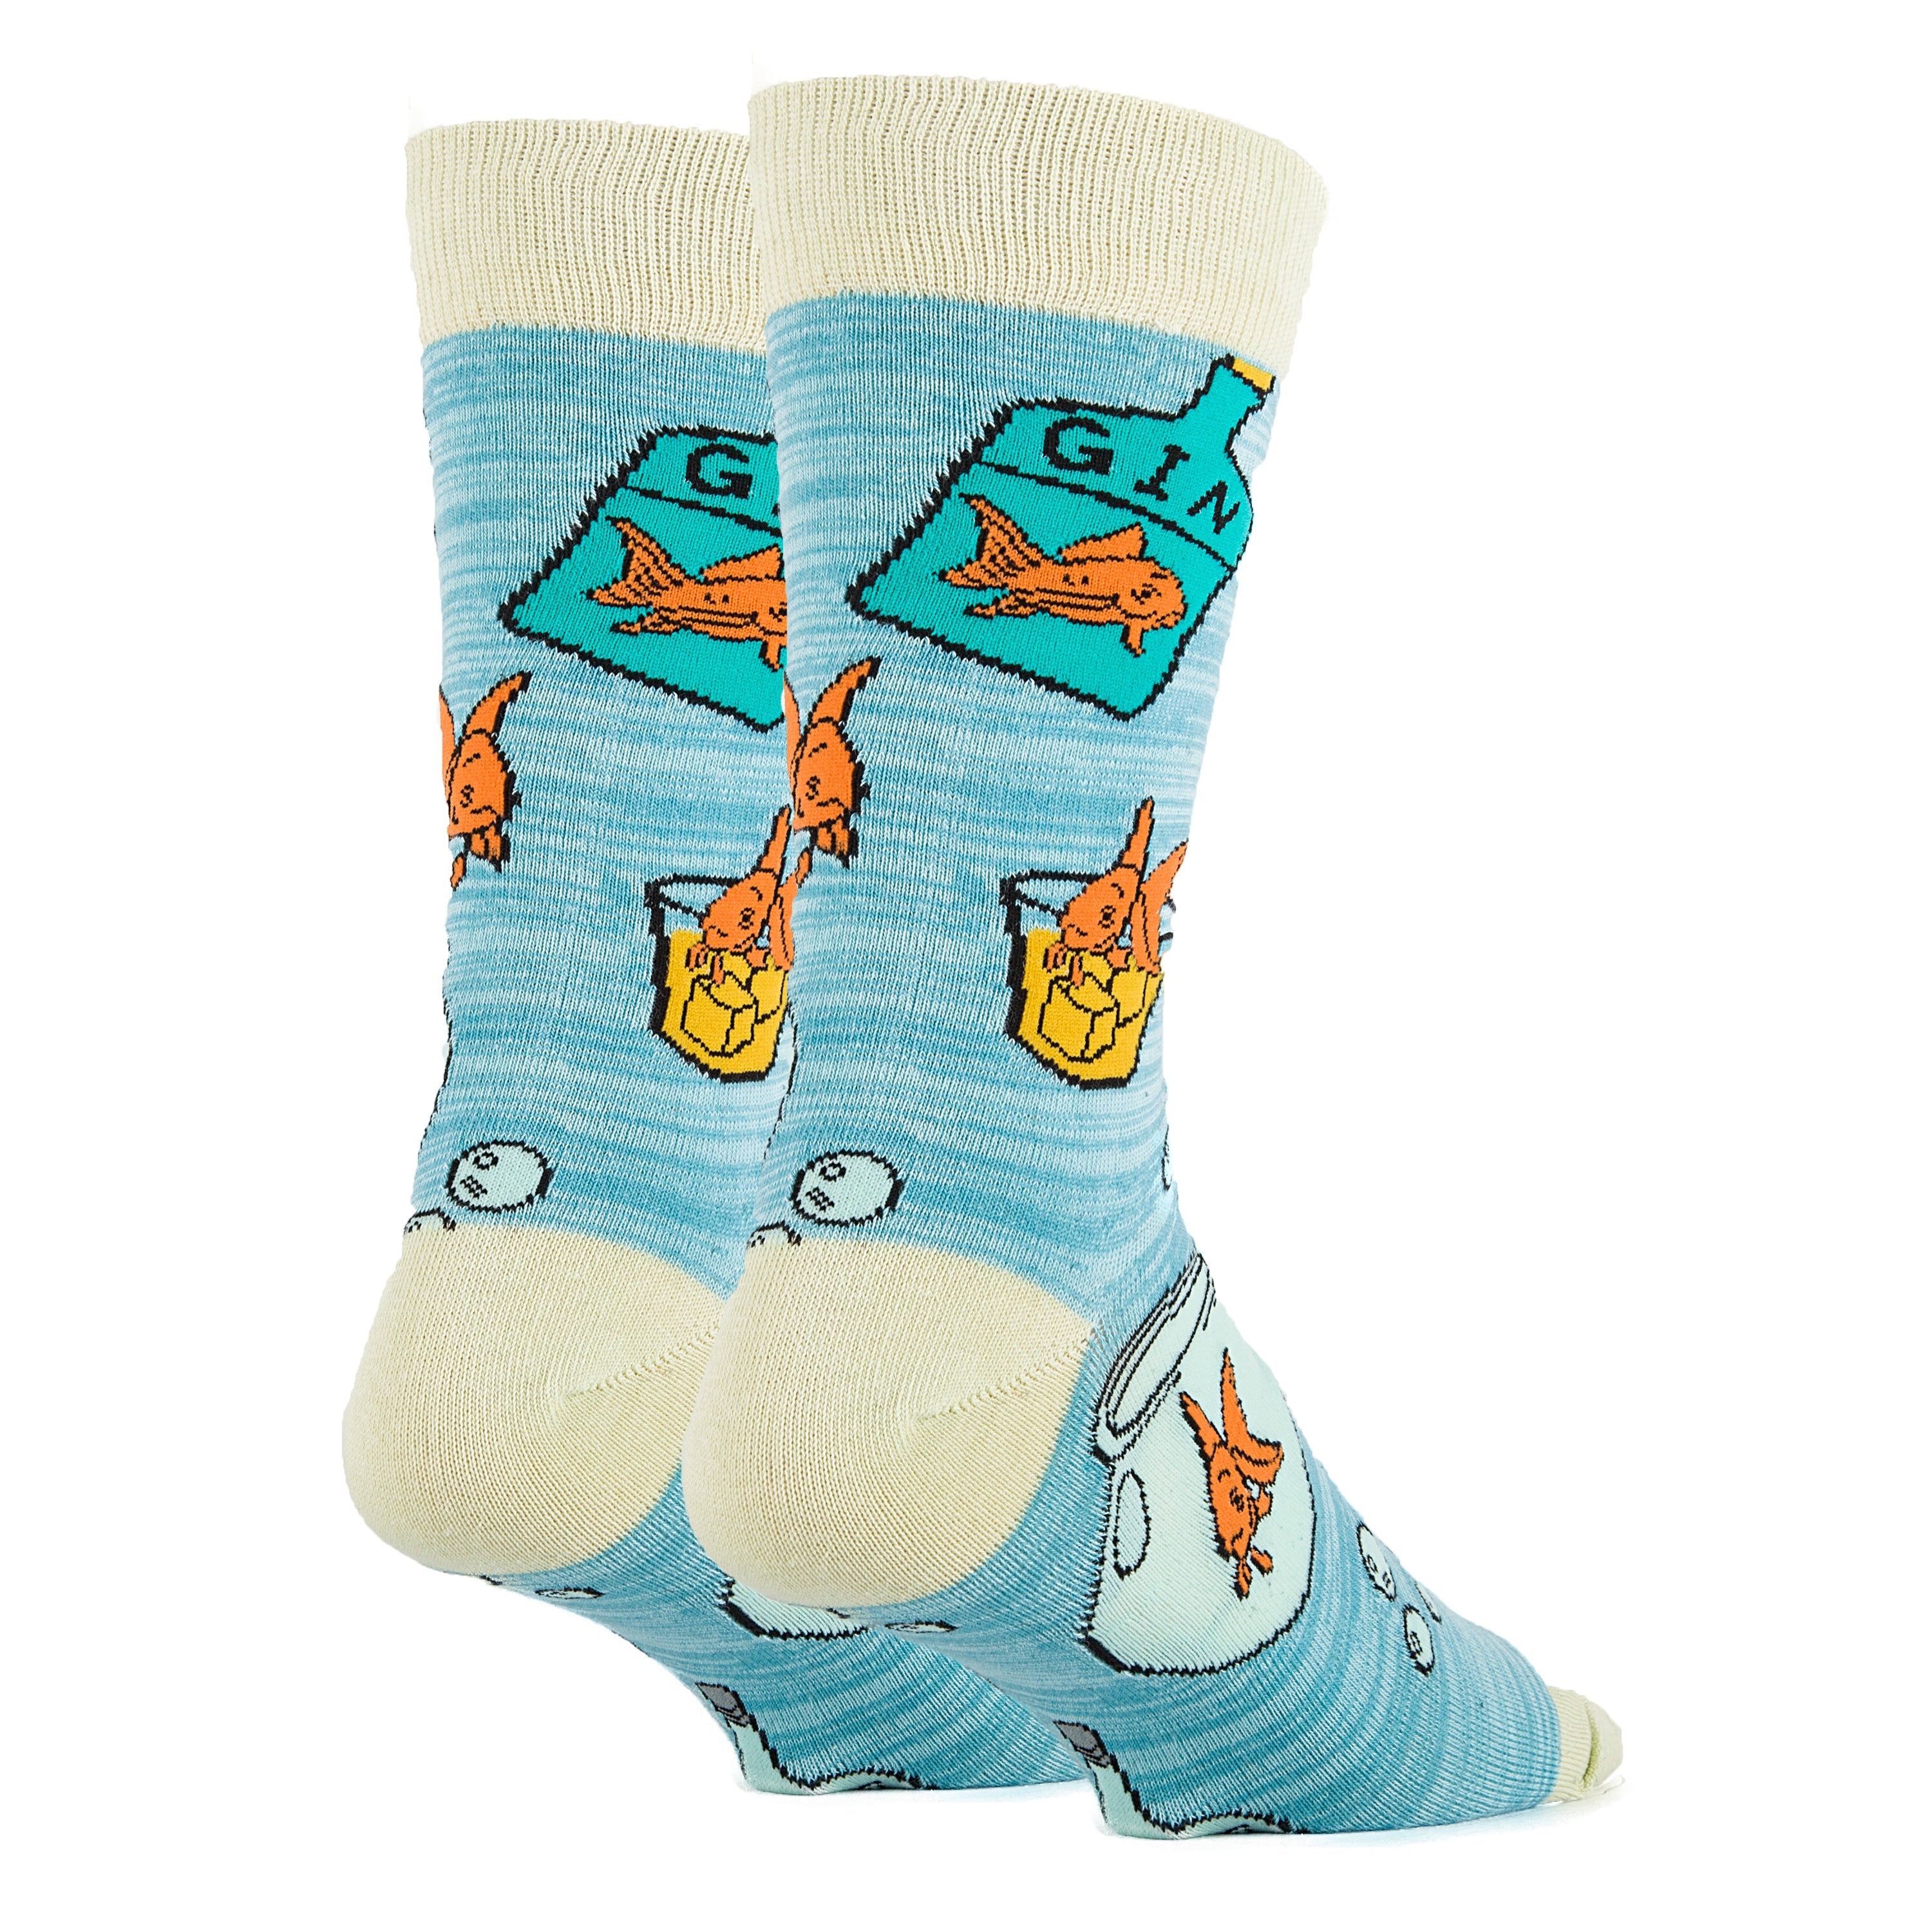 Night Frogs Men's Socks  Fun Novelty Socks for Him - Cute But